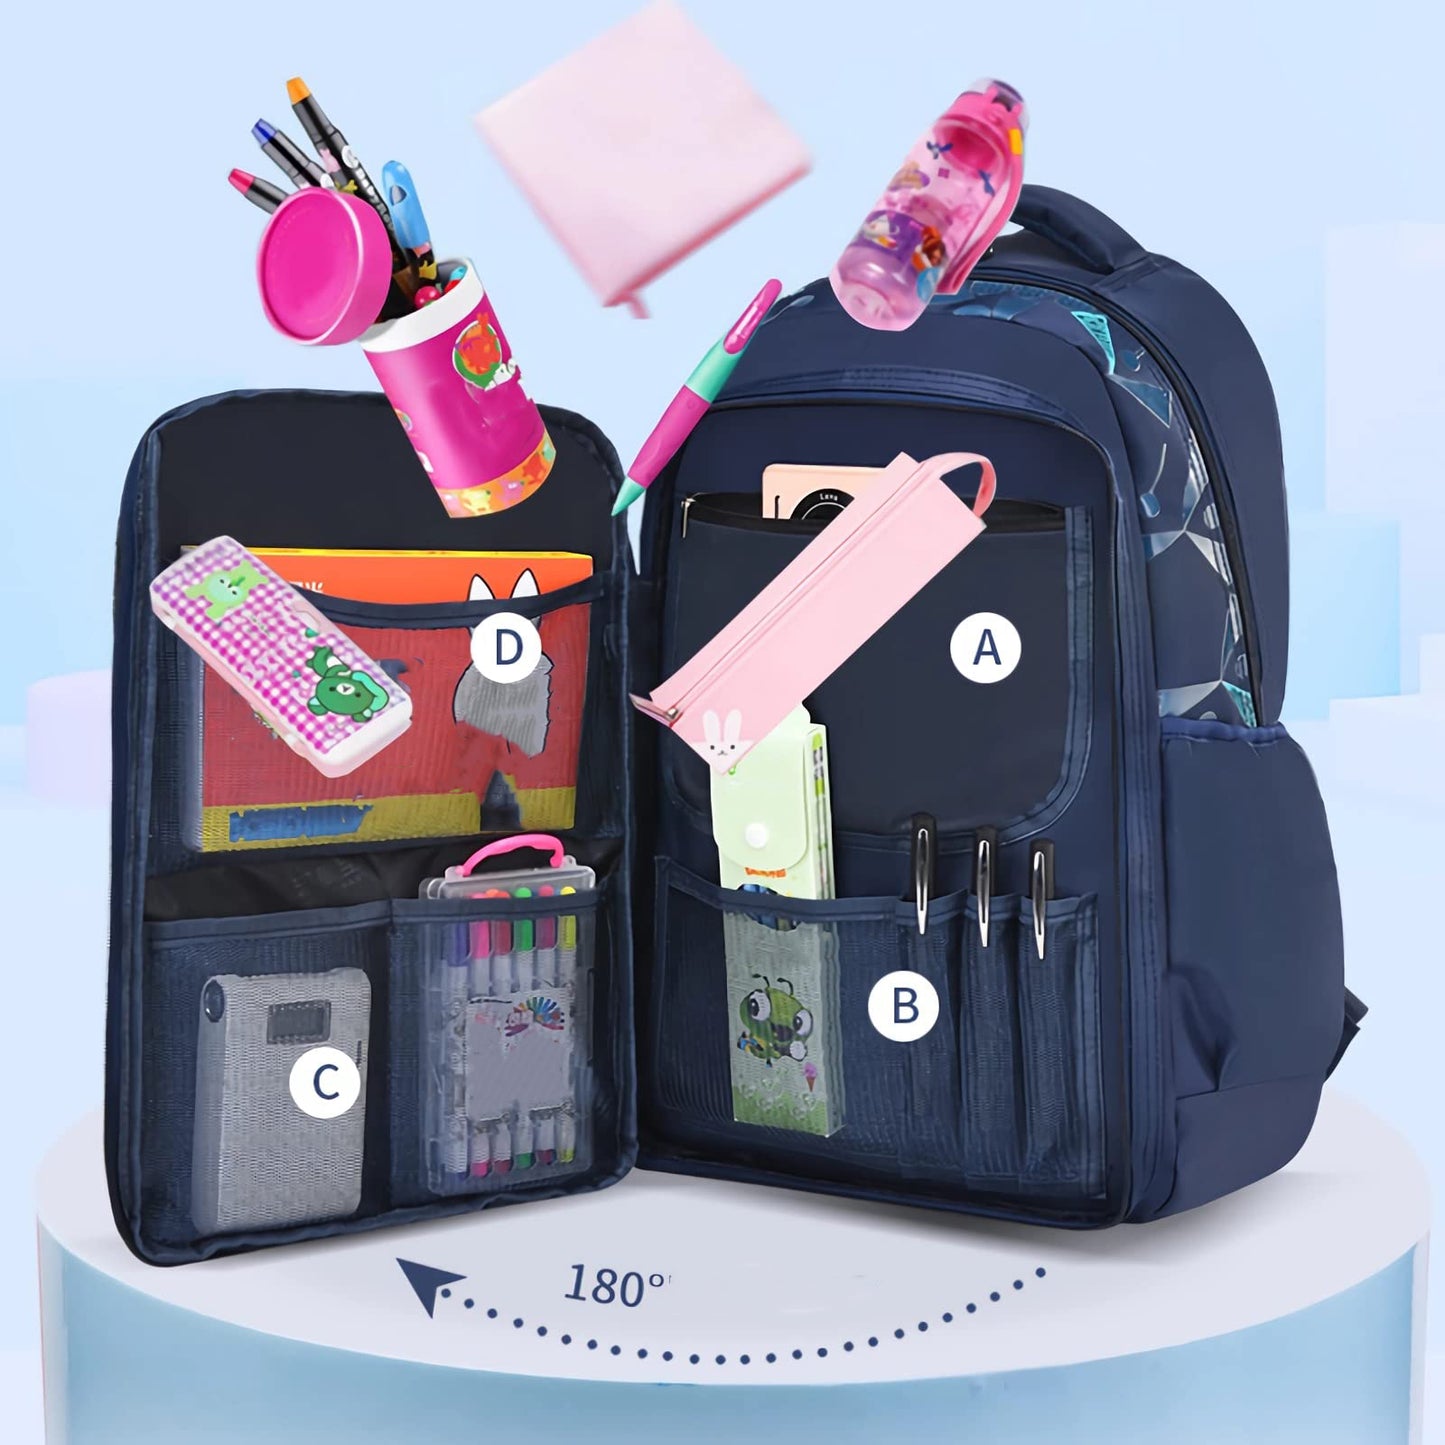 KEBEIXUAN Side Open School Bags,Boys Reflective Backpack